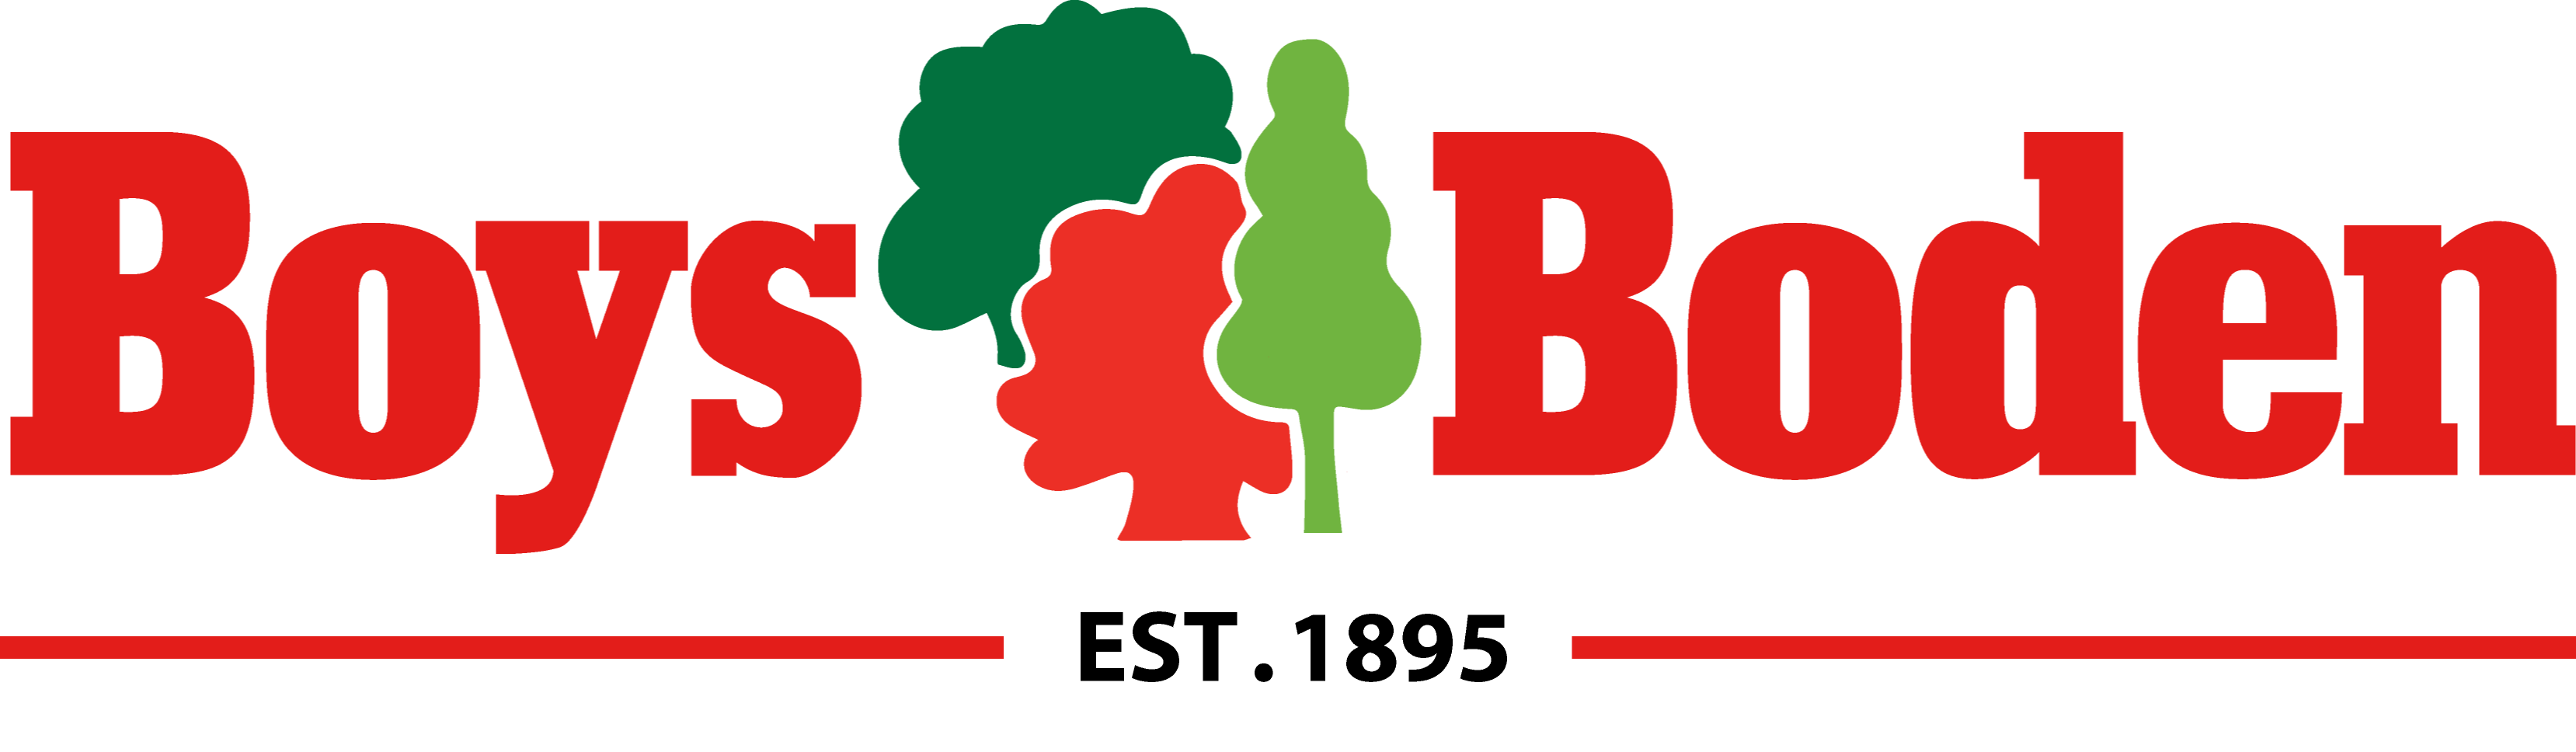 Boys & Boden Ltd Logo